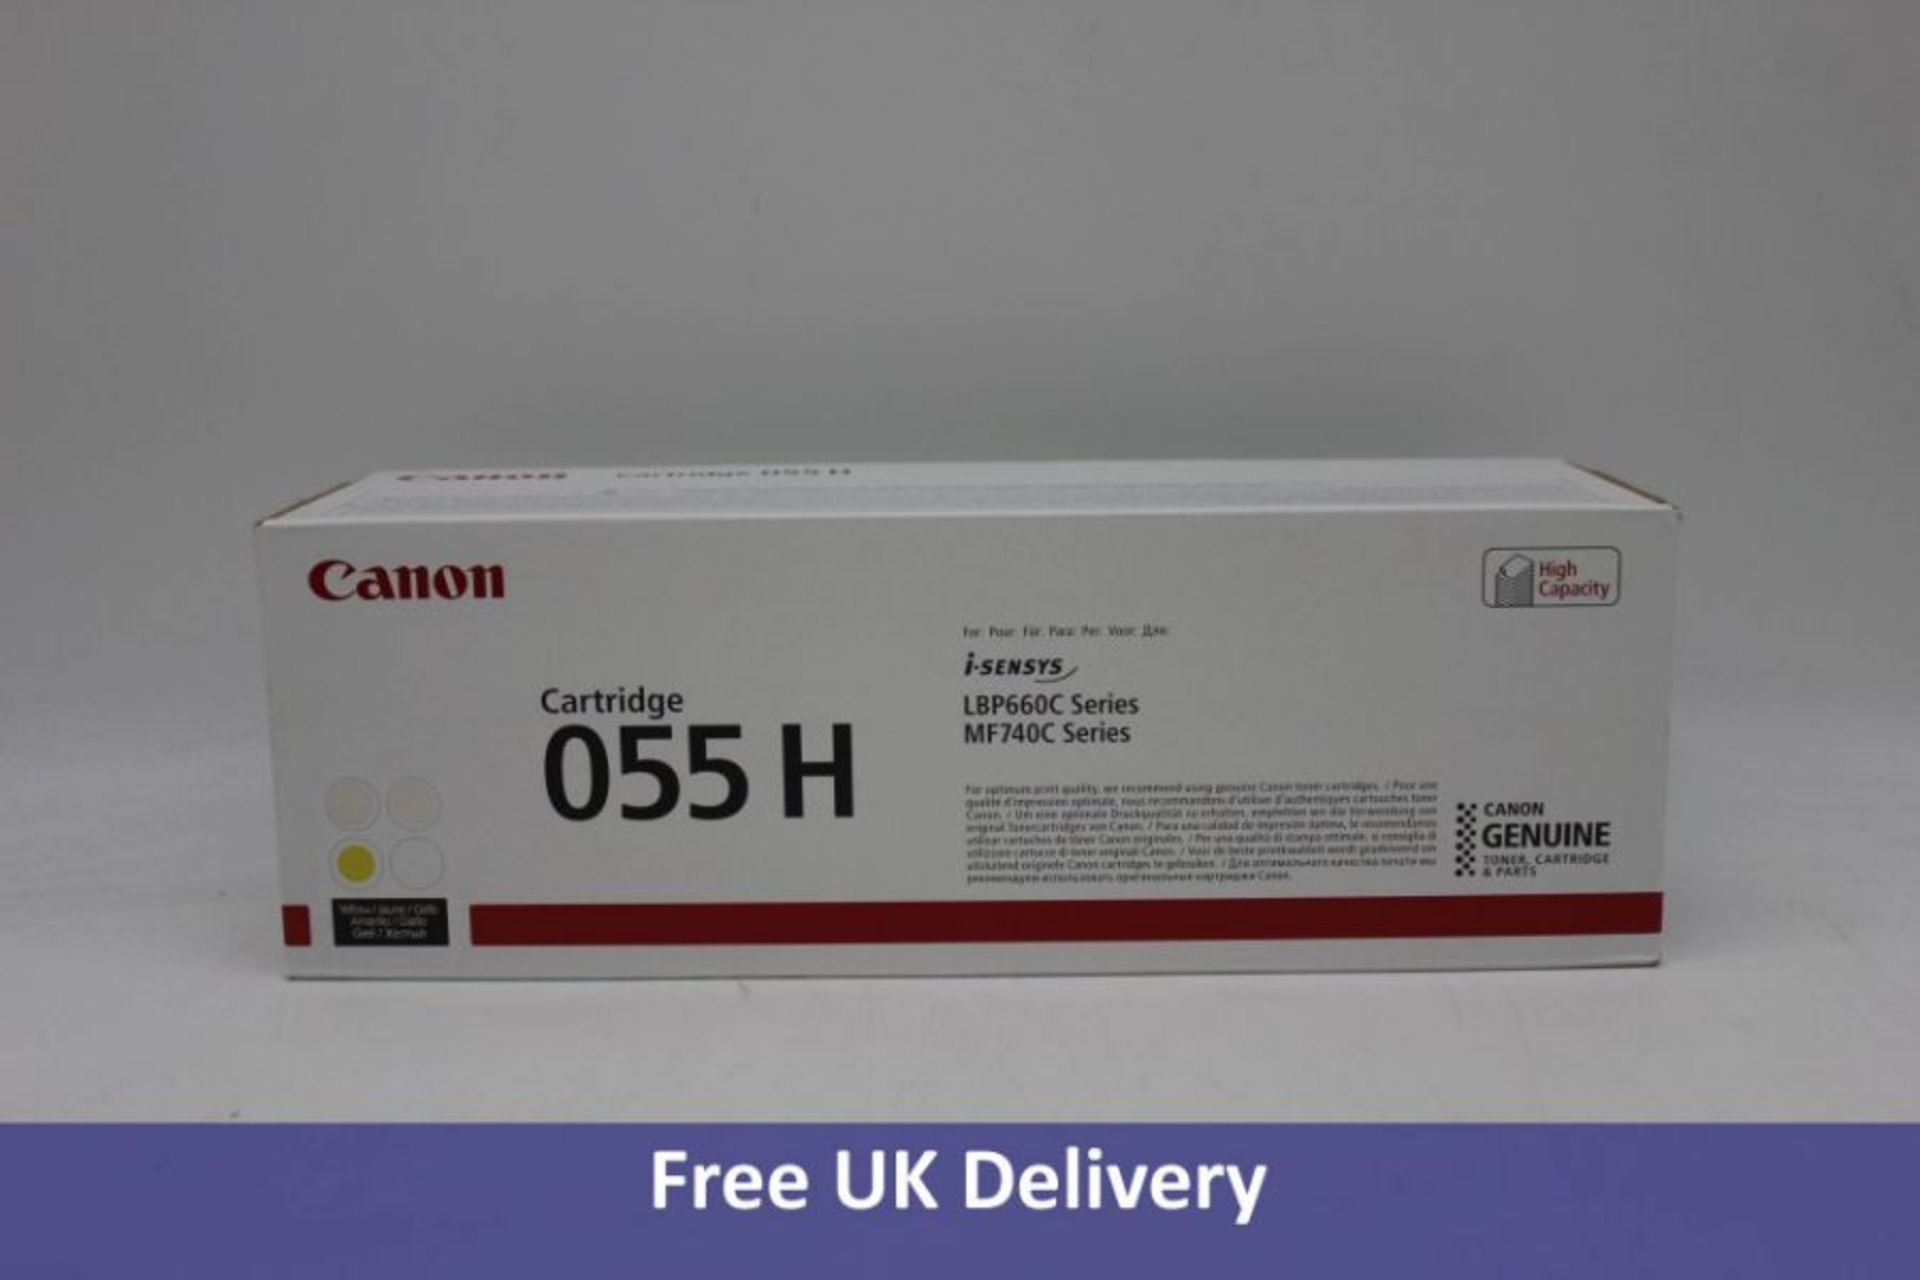 Three Canon Printer Cartridge 055 H, Yellow